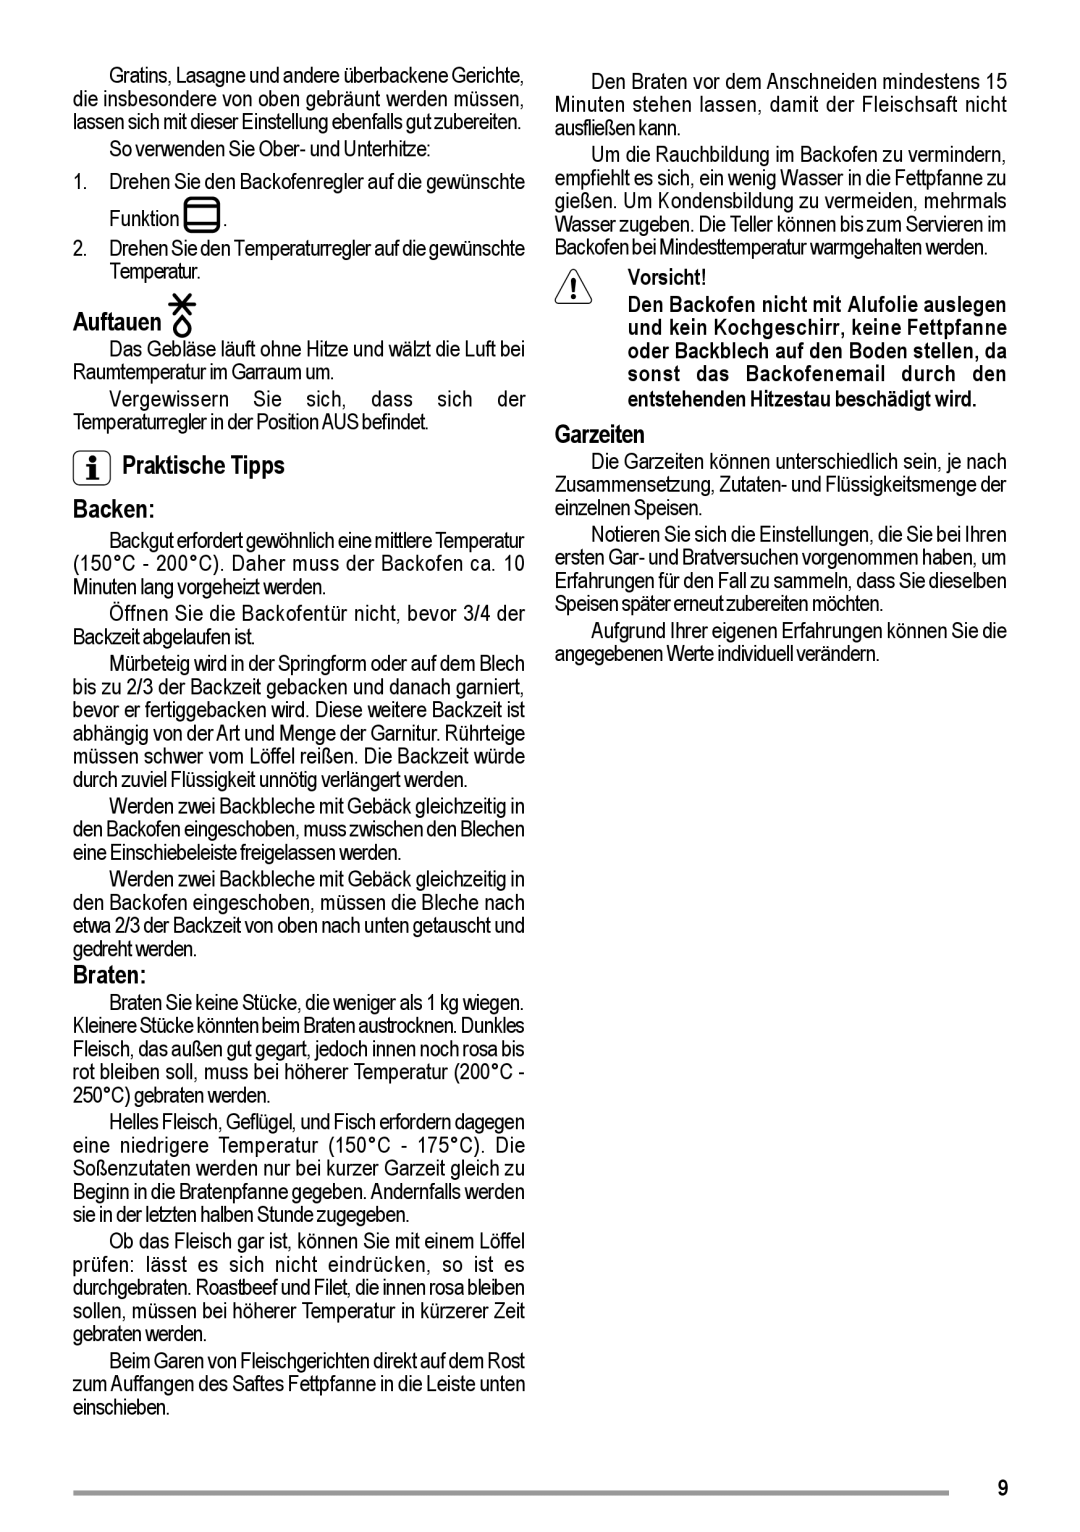 Zanussi ZOU 363 user manual Auftauen, Praktische Tipps Backen, Braten, Garzeiten 